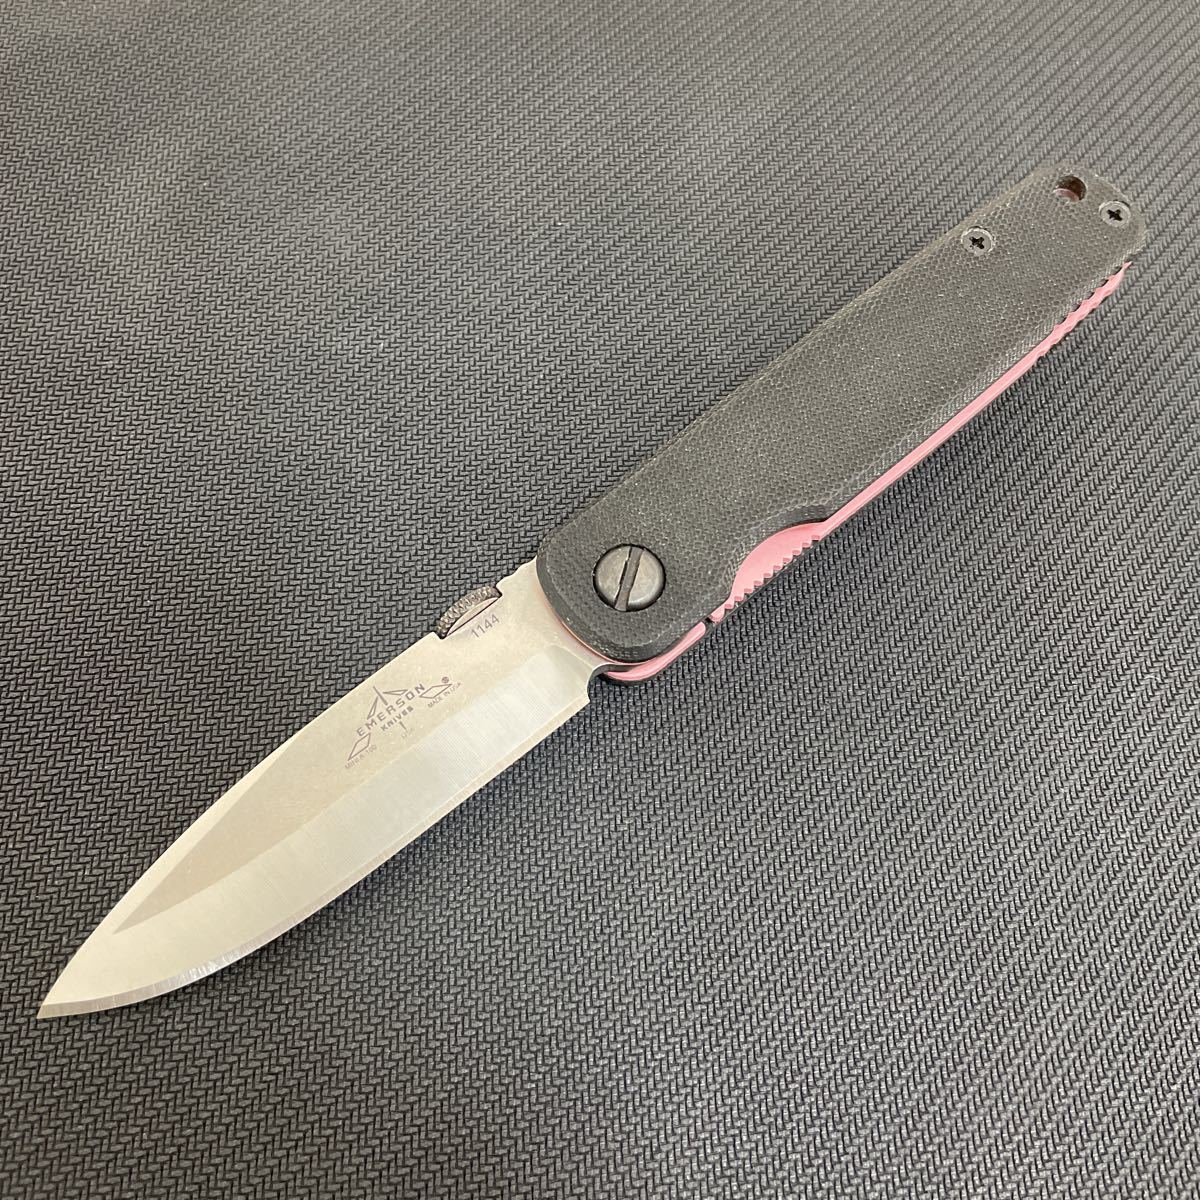 Emerson knives MINI A 100 pink edition 検) EDC